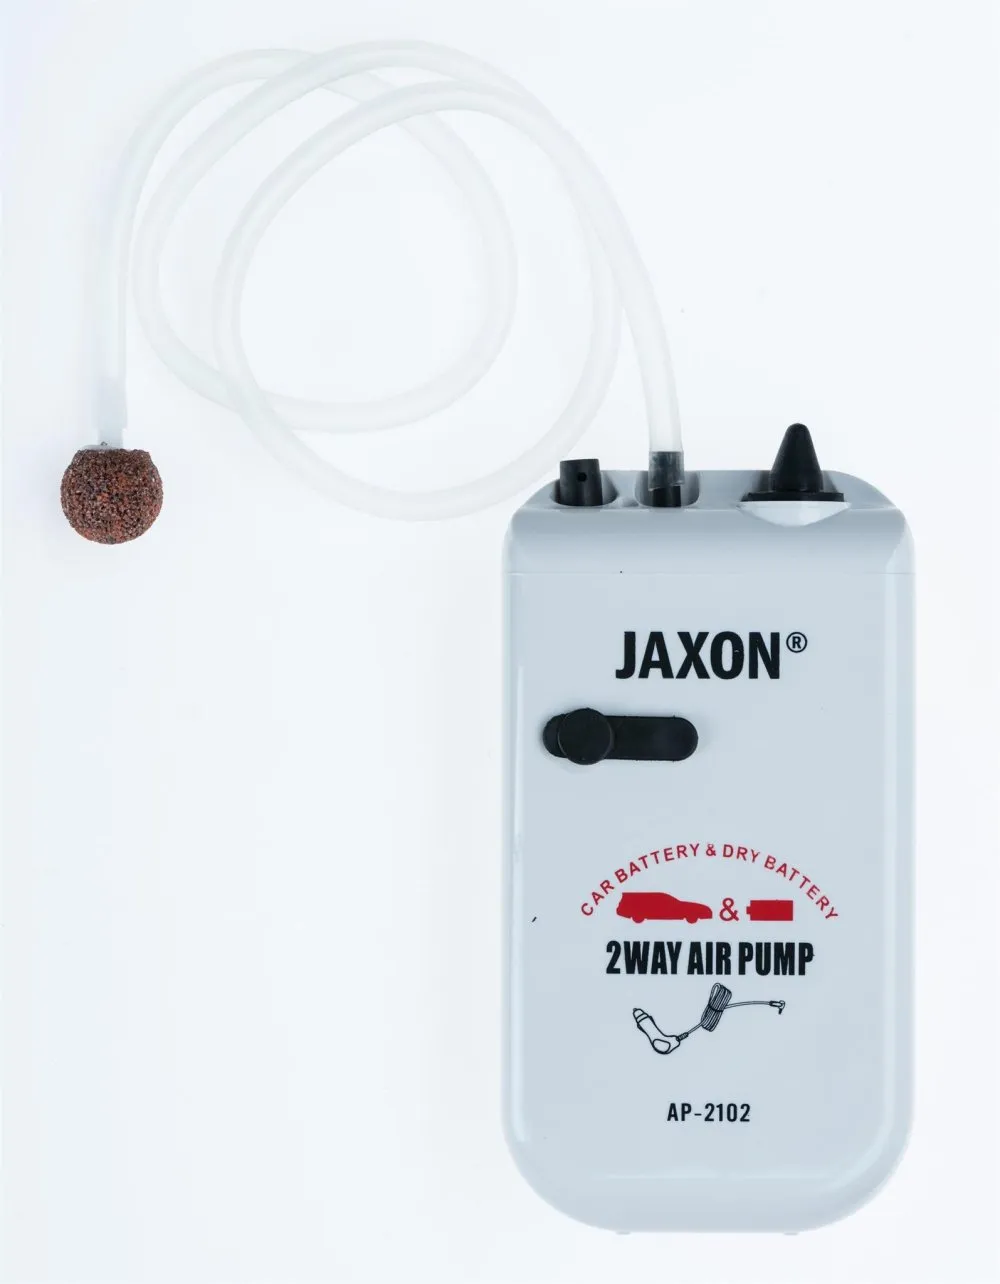 NextFish - Horgász webshop és horgászbolt - JAXON AIR PUMP 2xR20 - 1,5V NOT INCL.